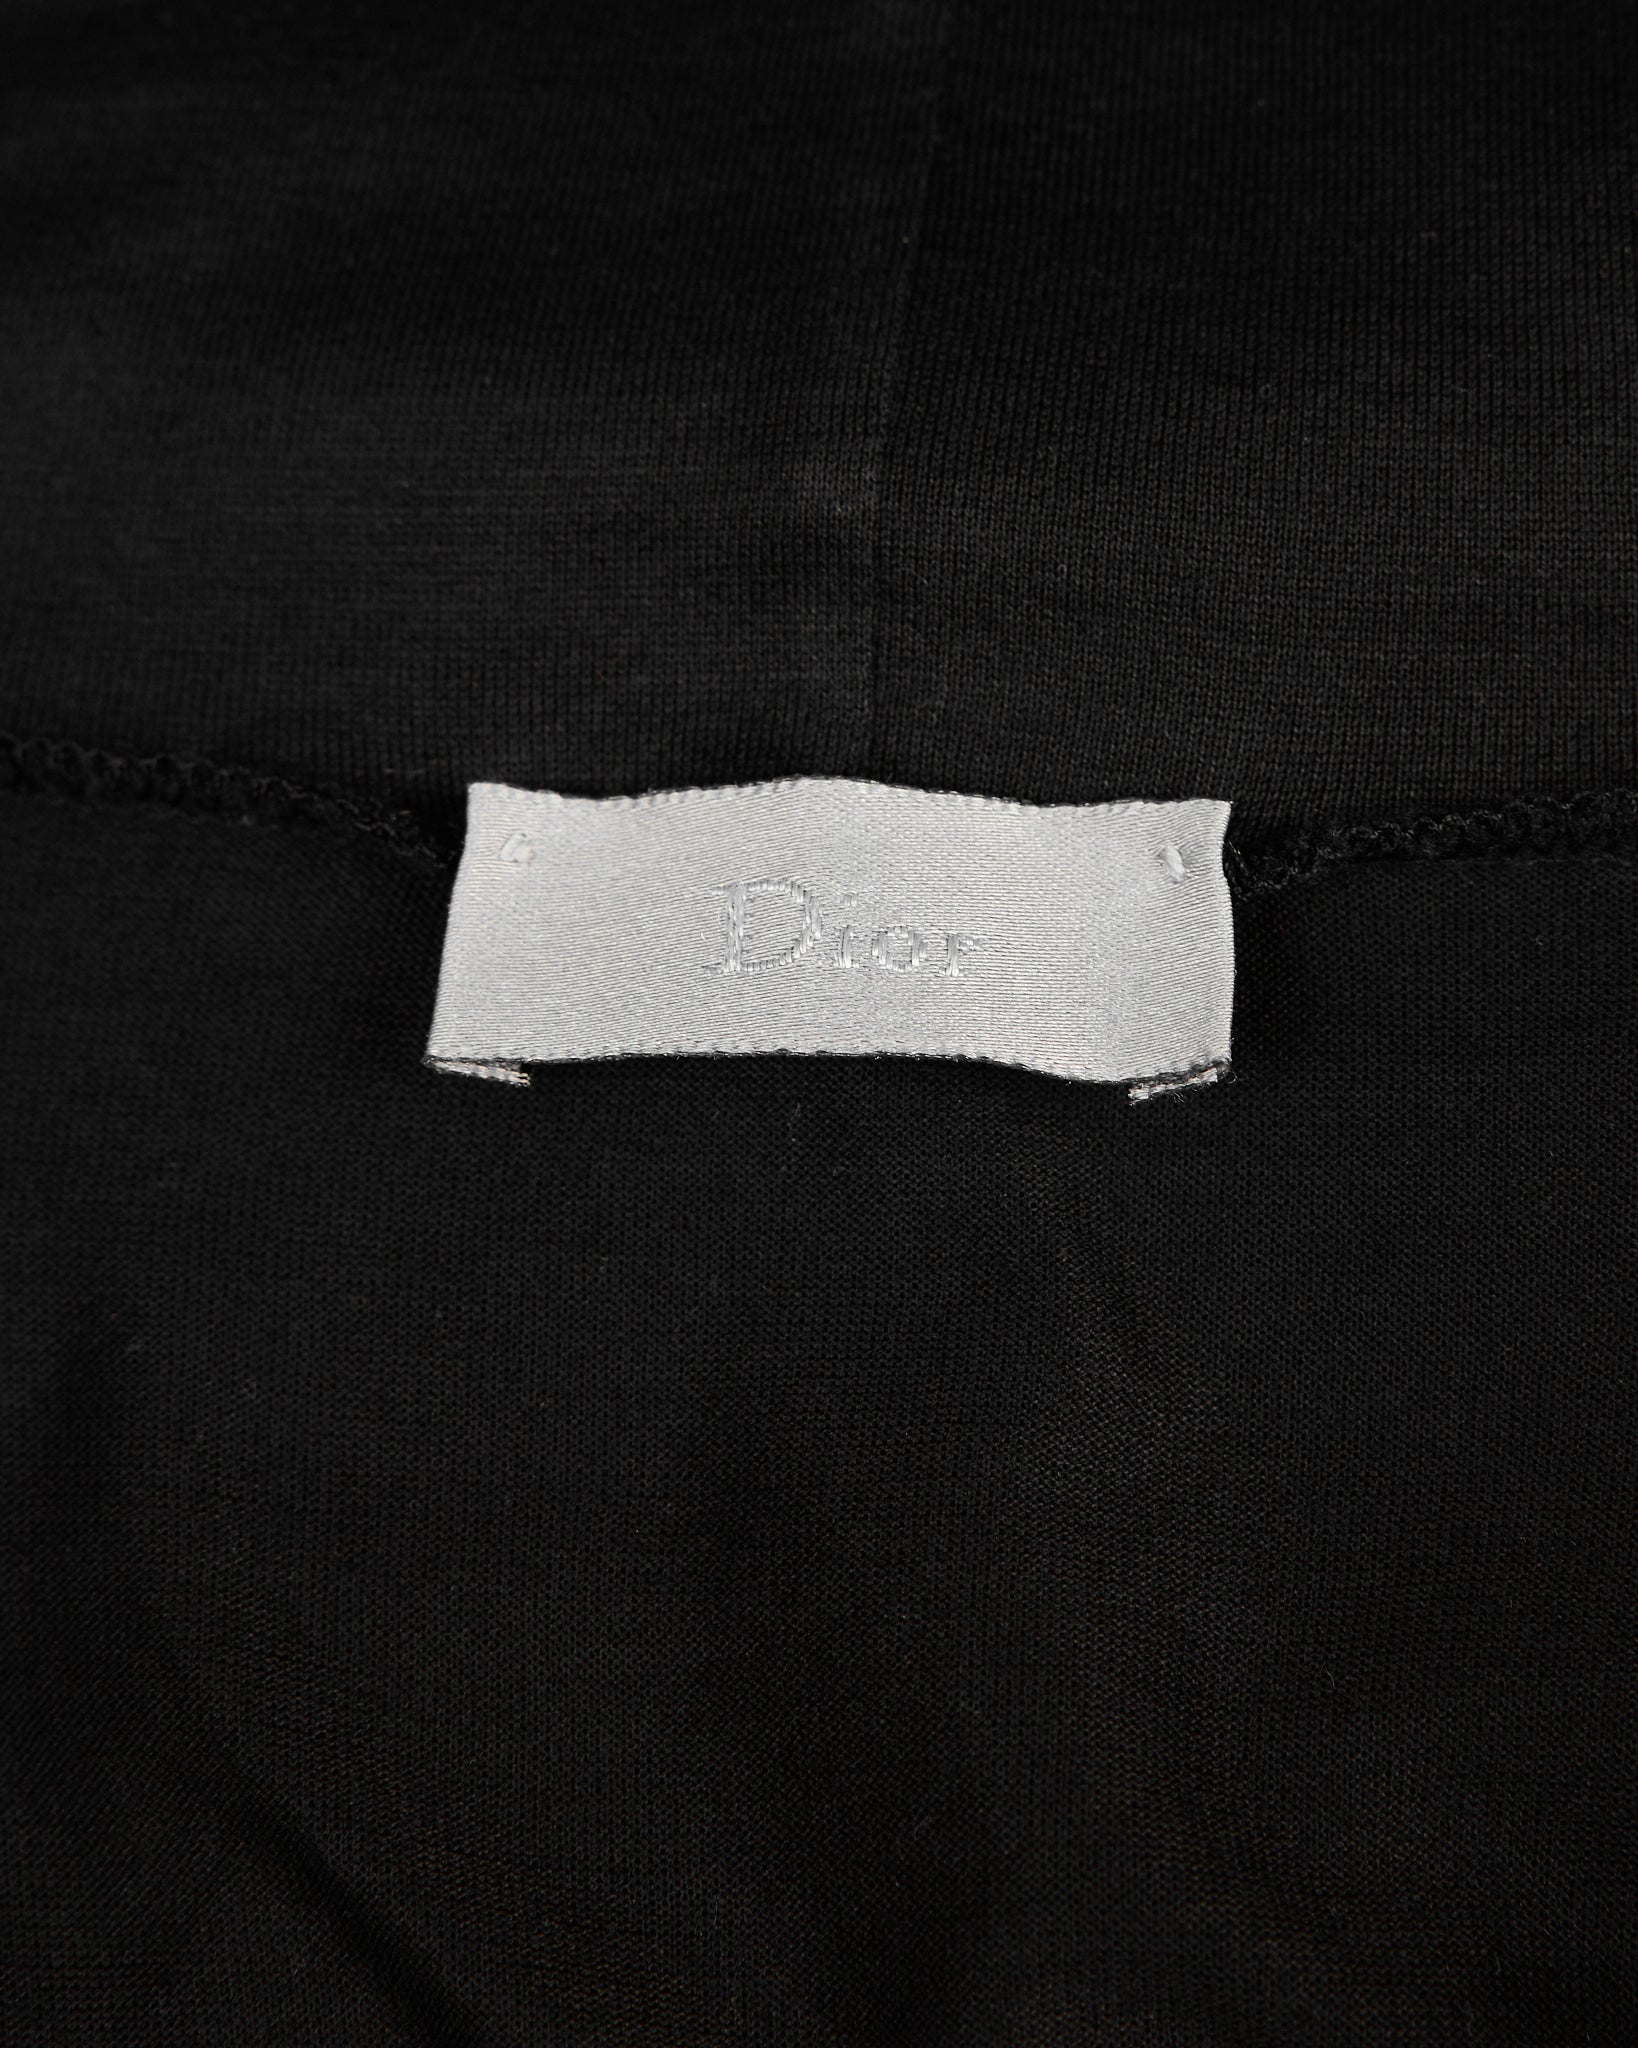 Dior Homme Mercerized Turtleneck Top - AW02 "Reflexion" tag detail photo